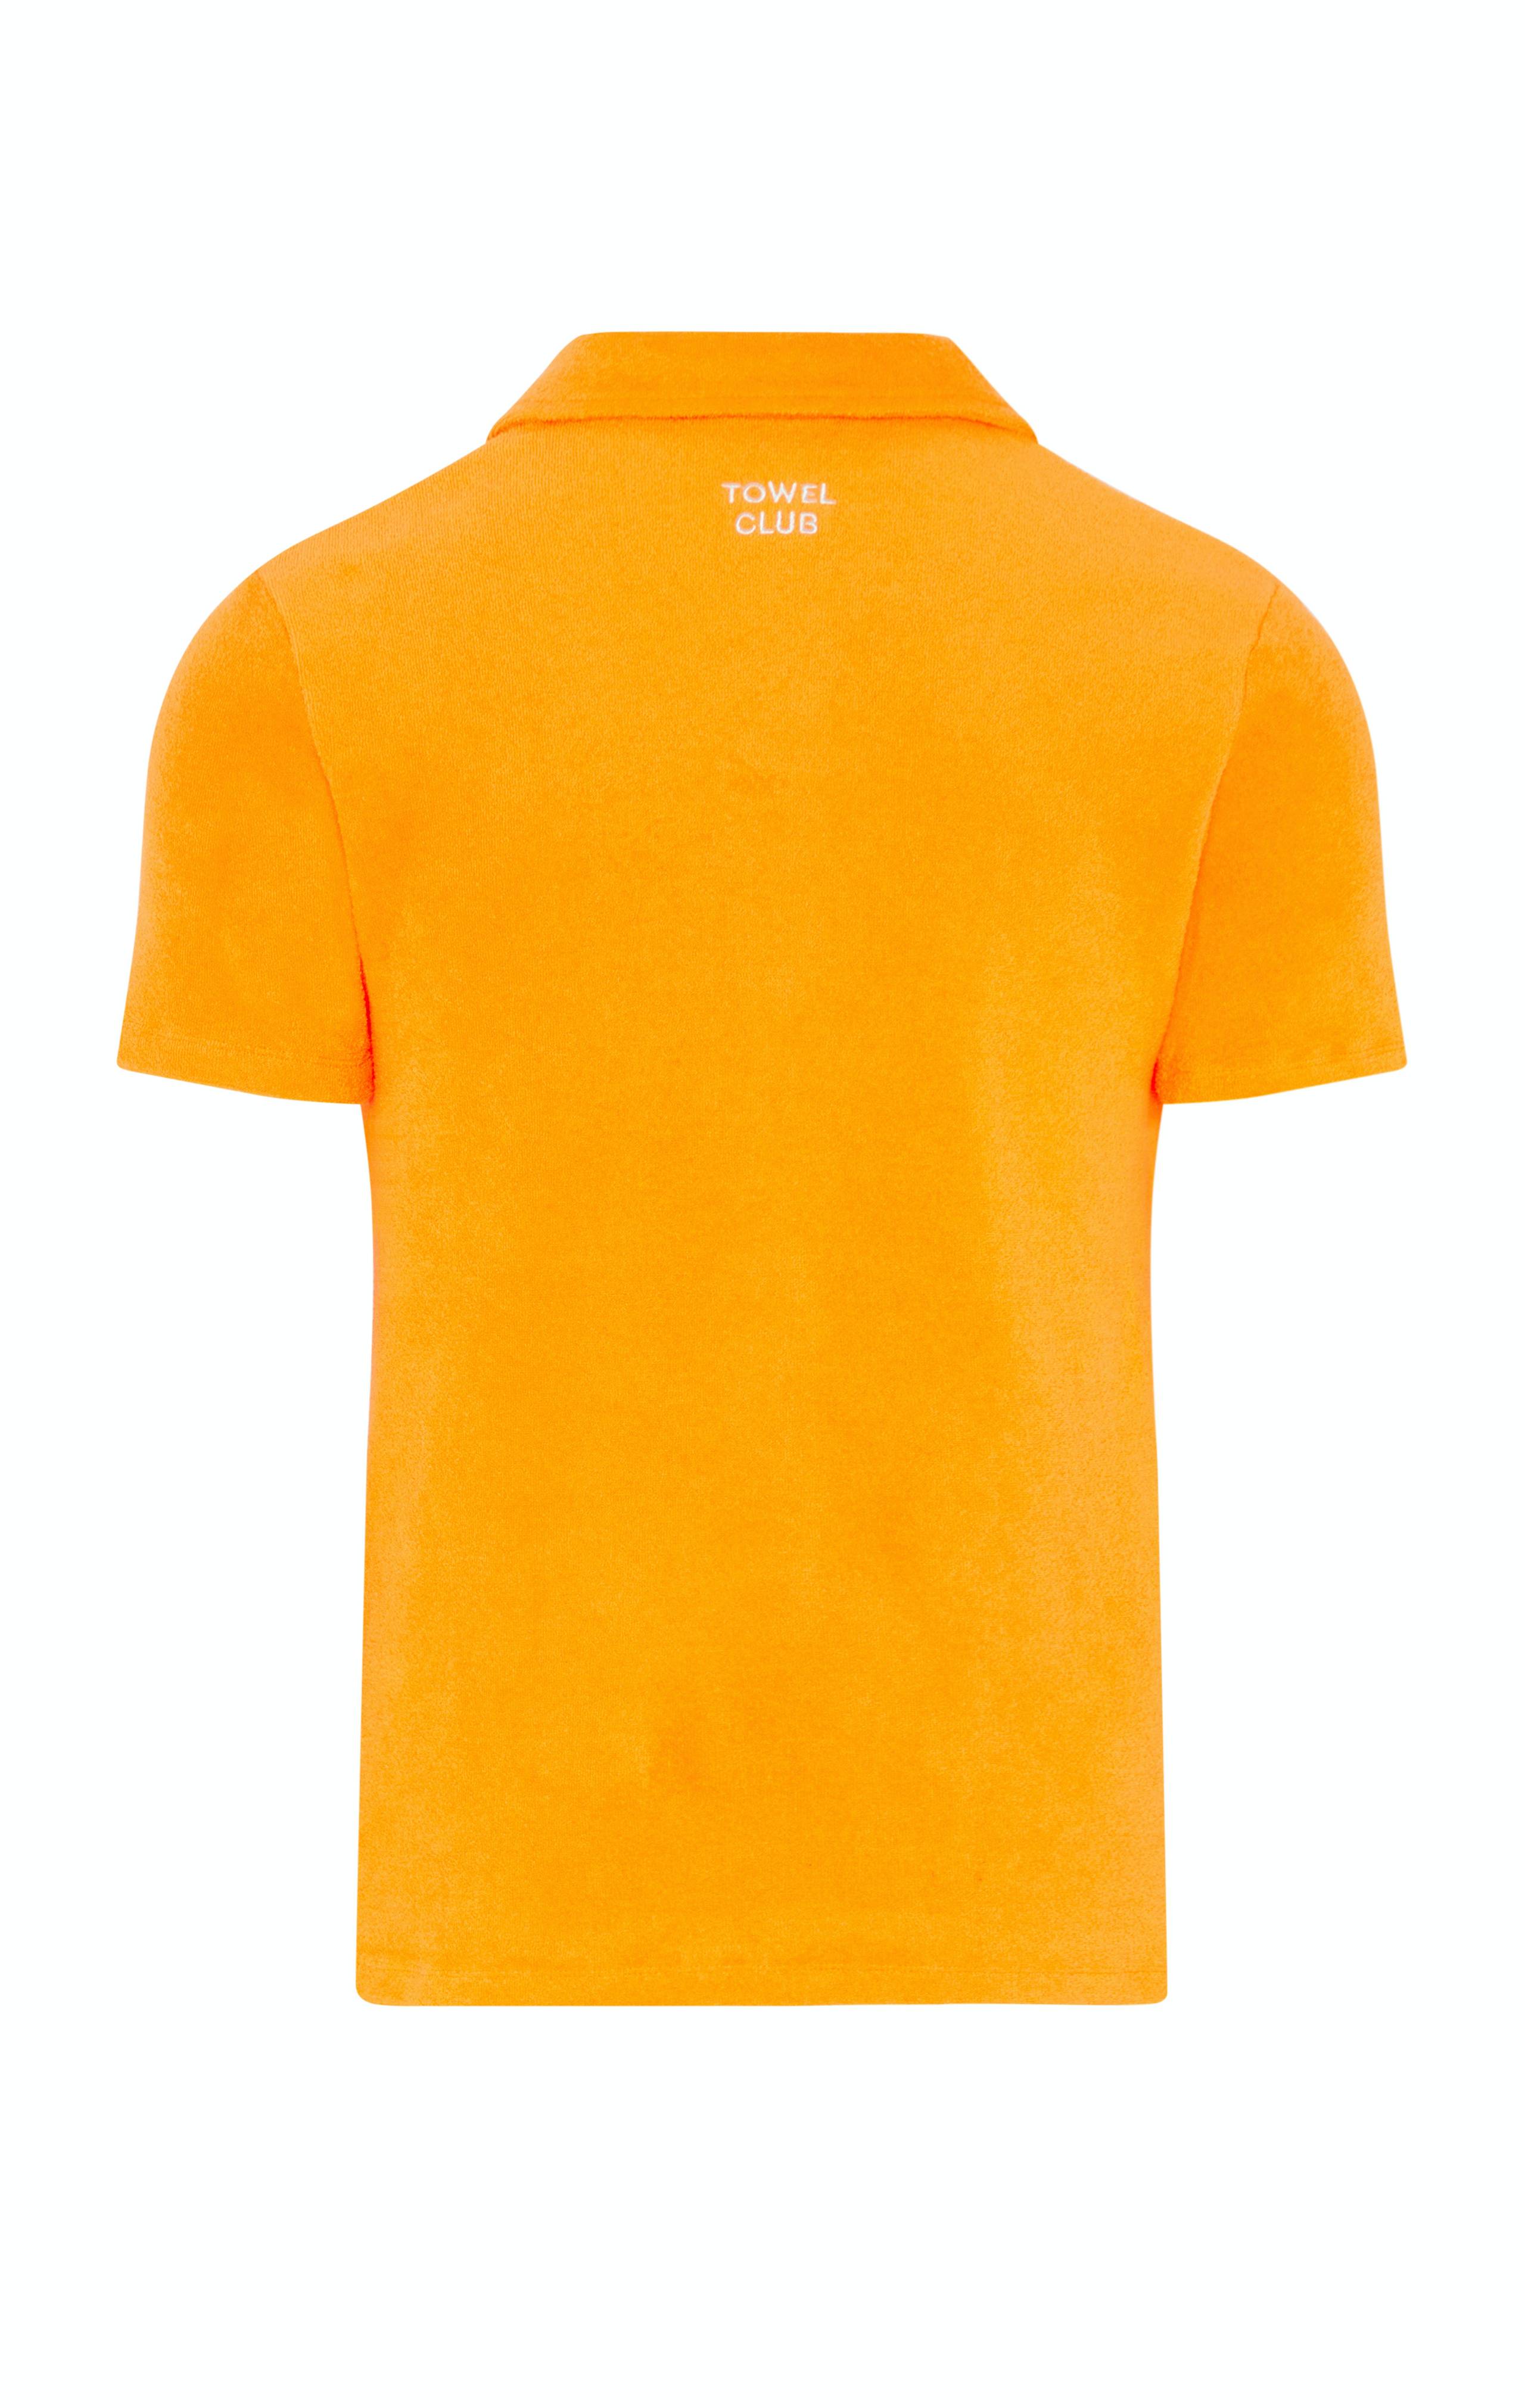 Onepiece Towel Club Piquet Shirt Orange - 2